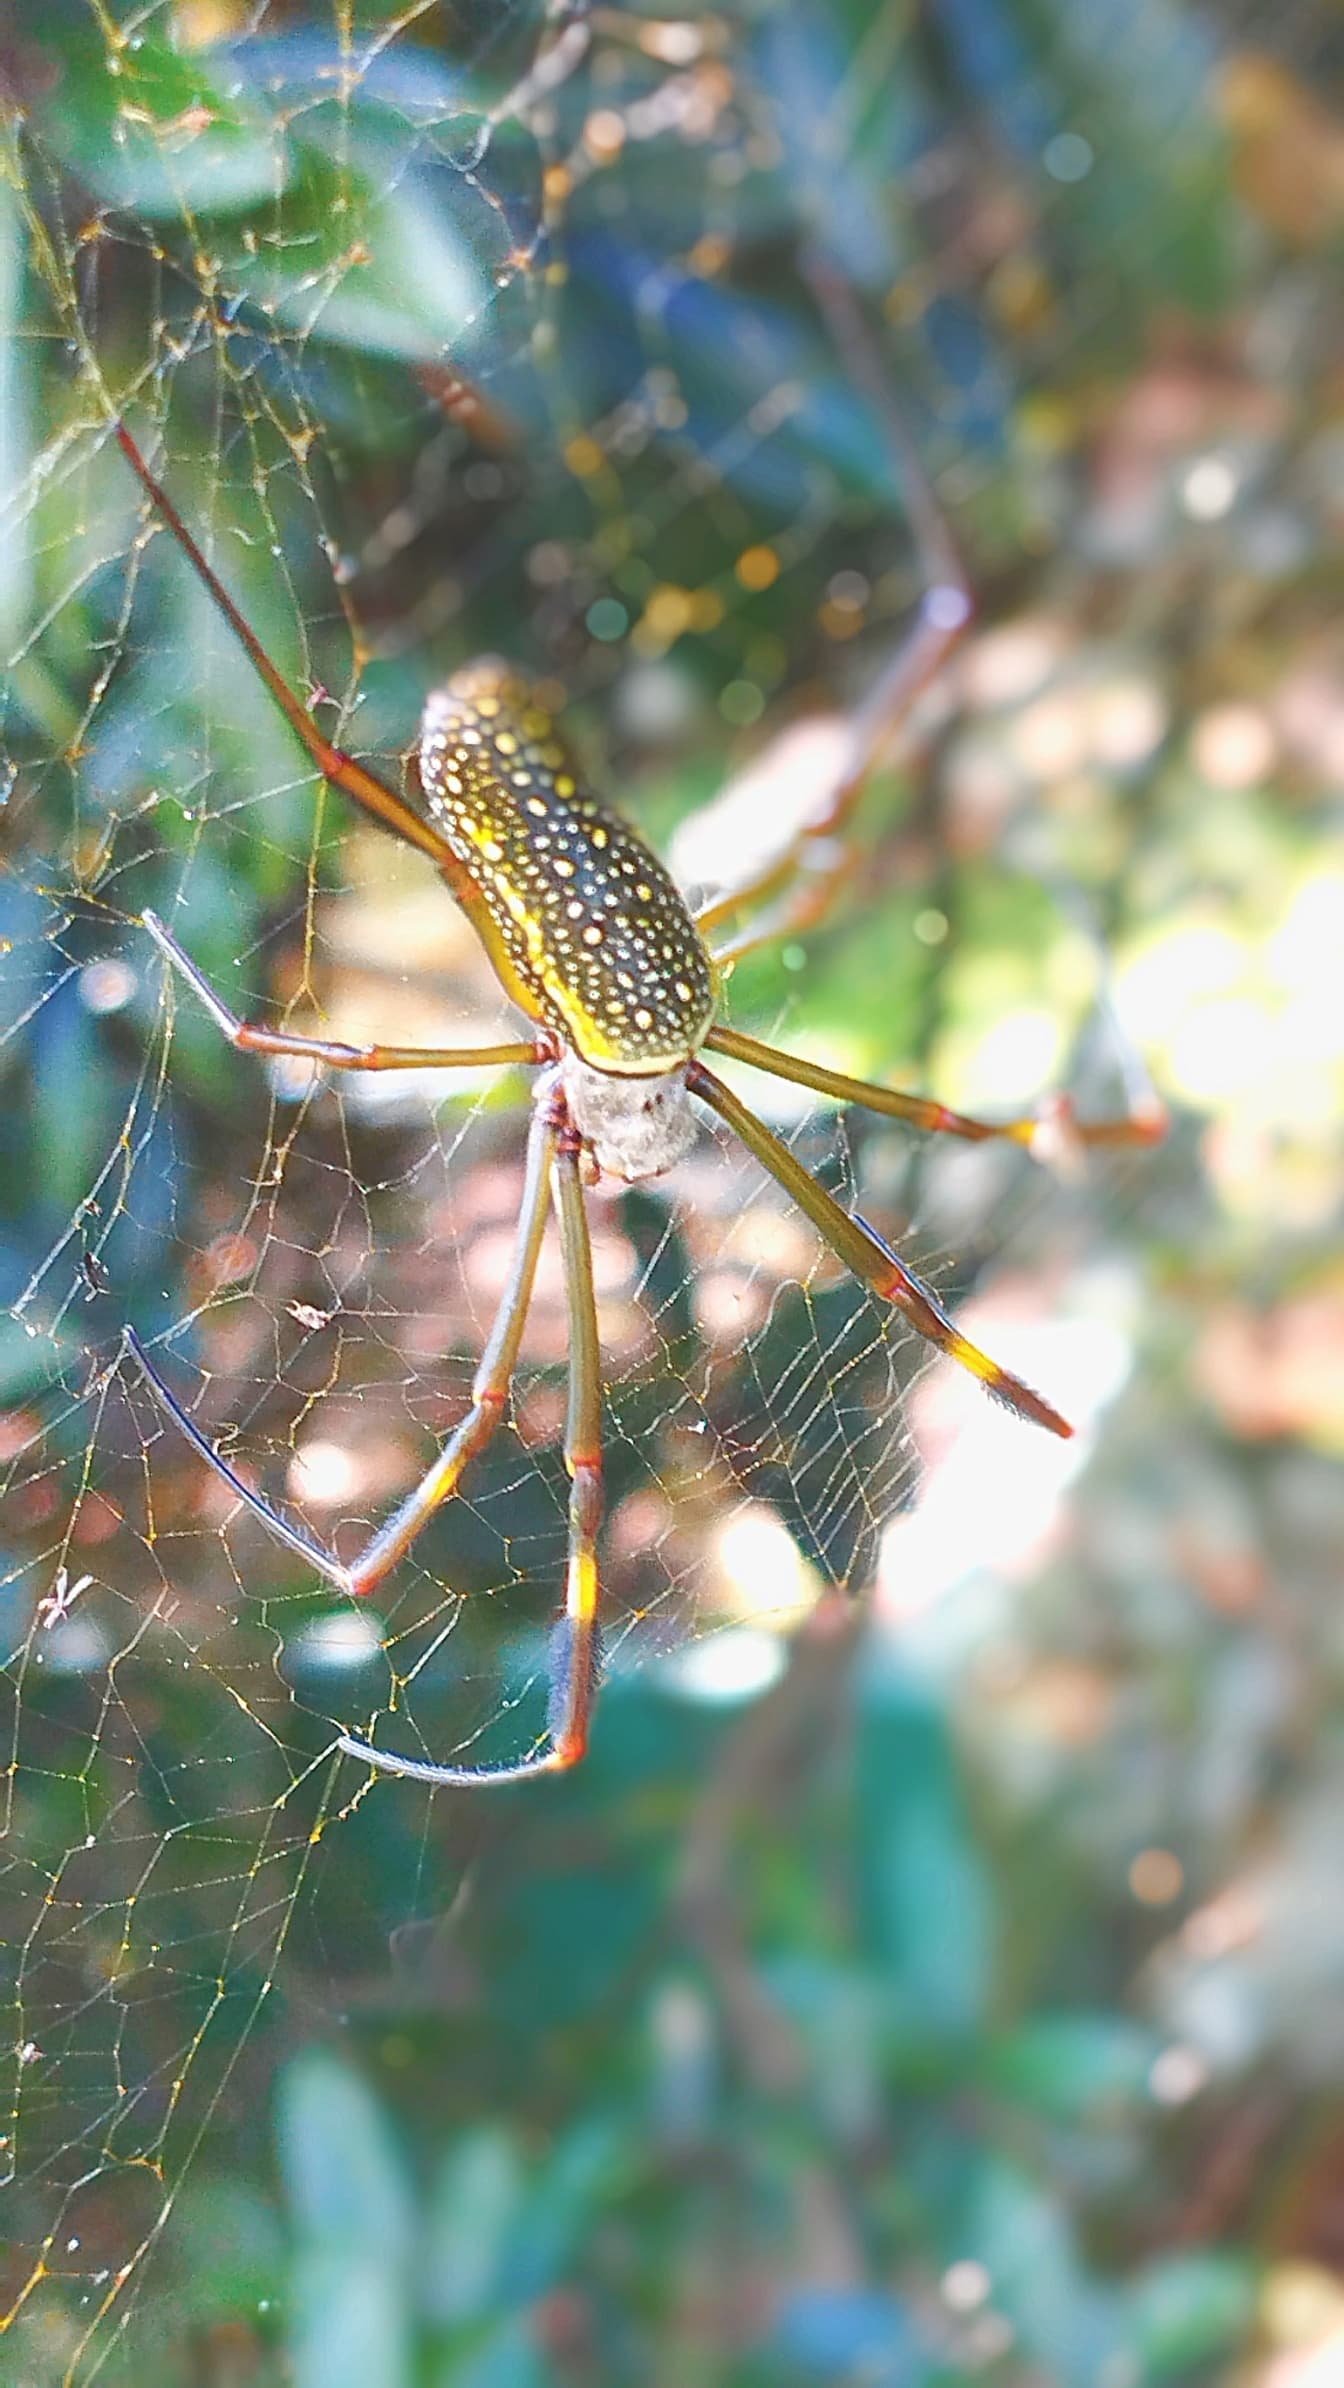 Krupni plan zlatnog svilenog pauka u web (Trichonephila clavipes)